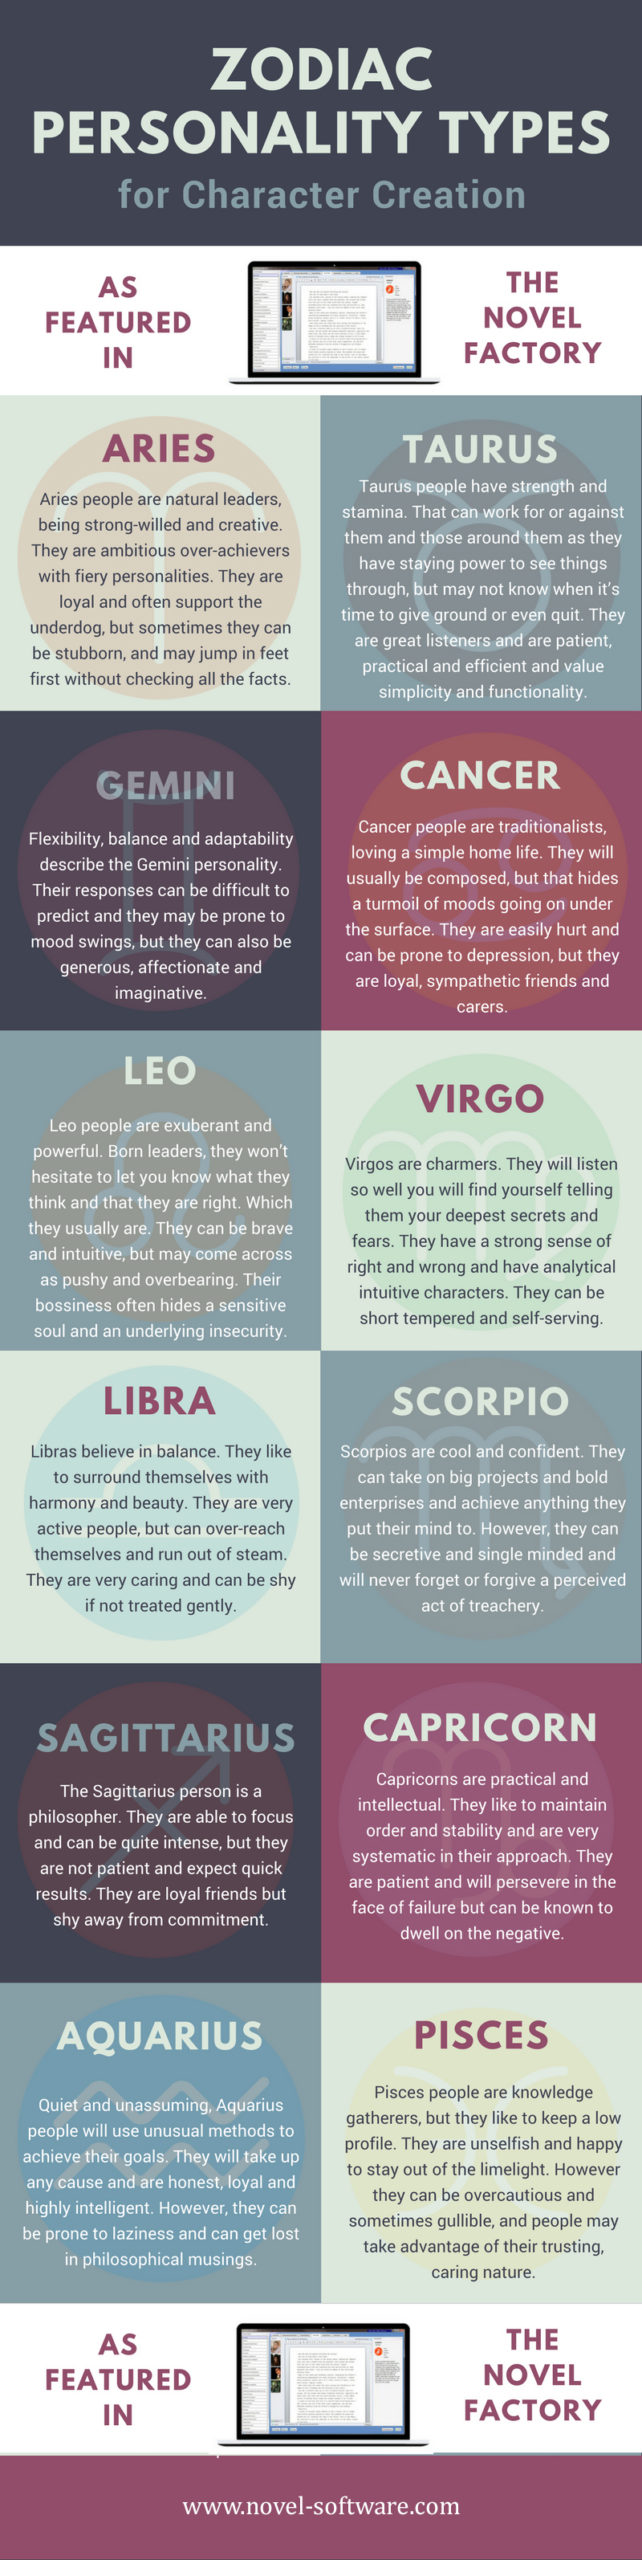 zodiacpersonalitytypes